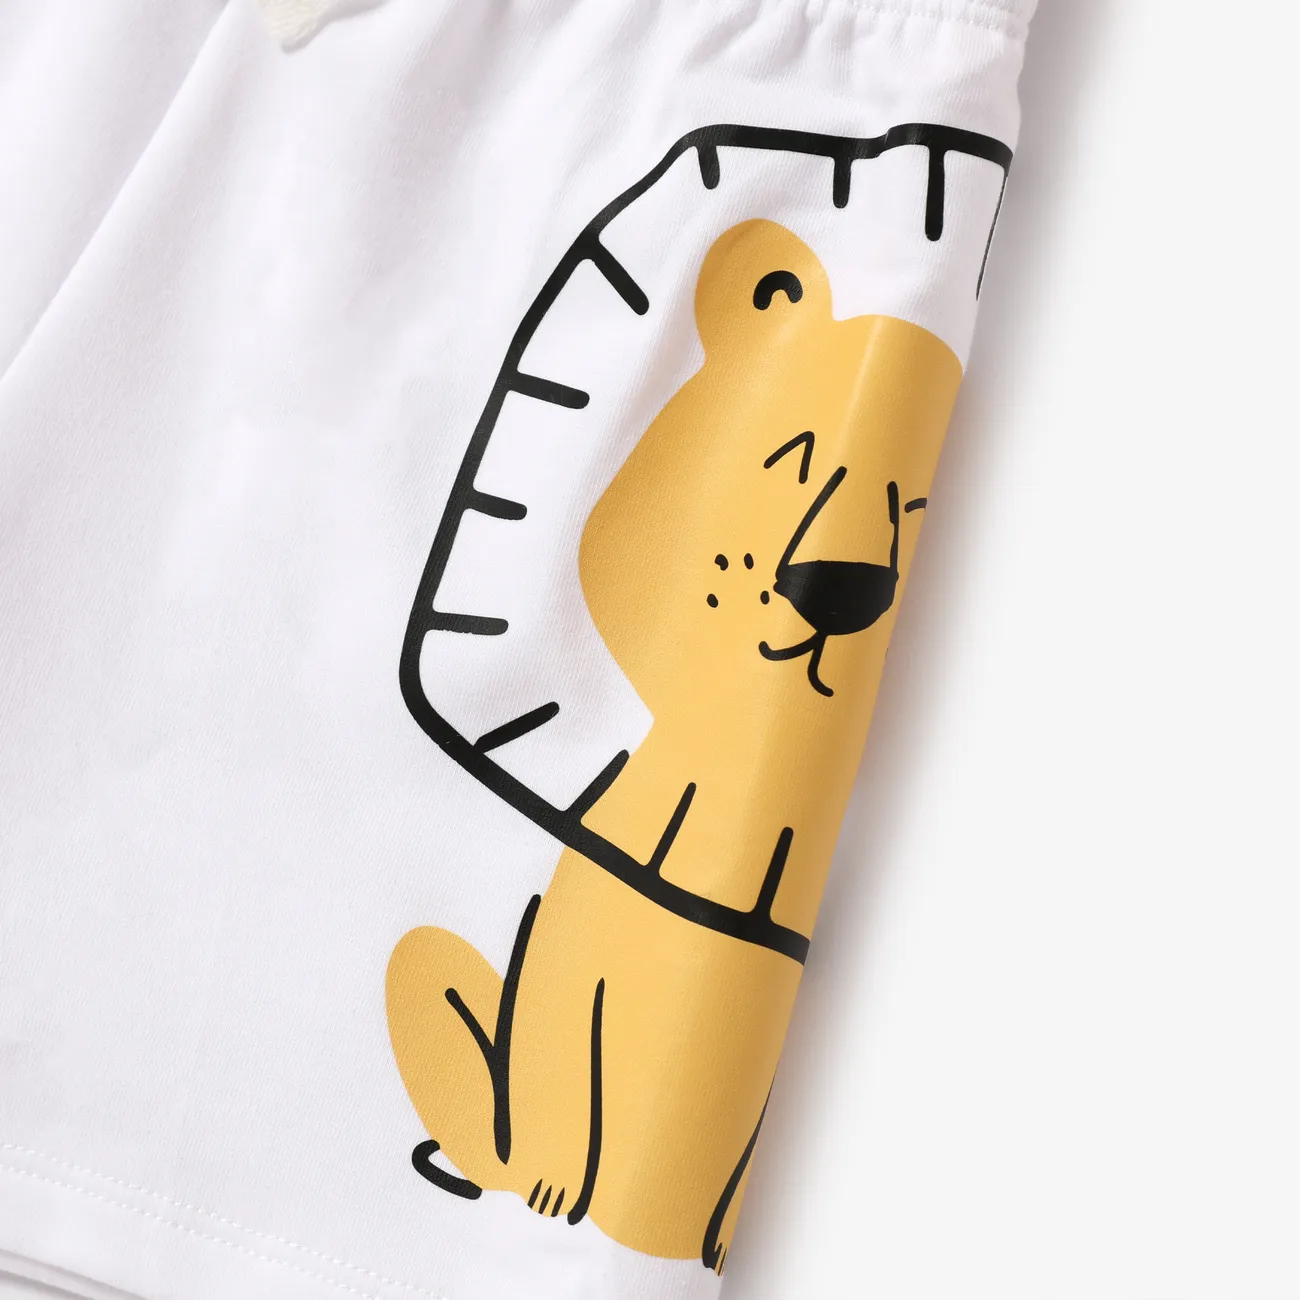 Toddler Boy 2pcs Lion Print Tee and Shorts Set Yellow big image 1